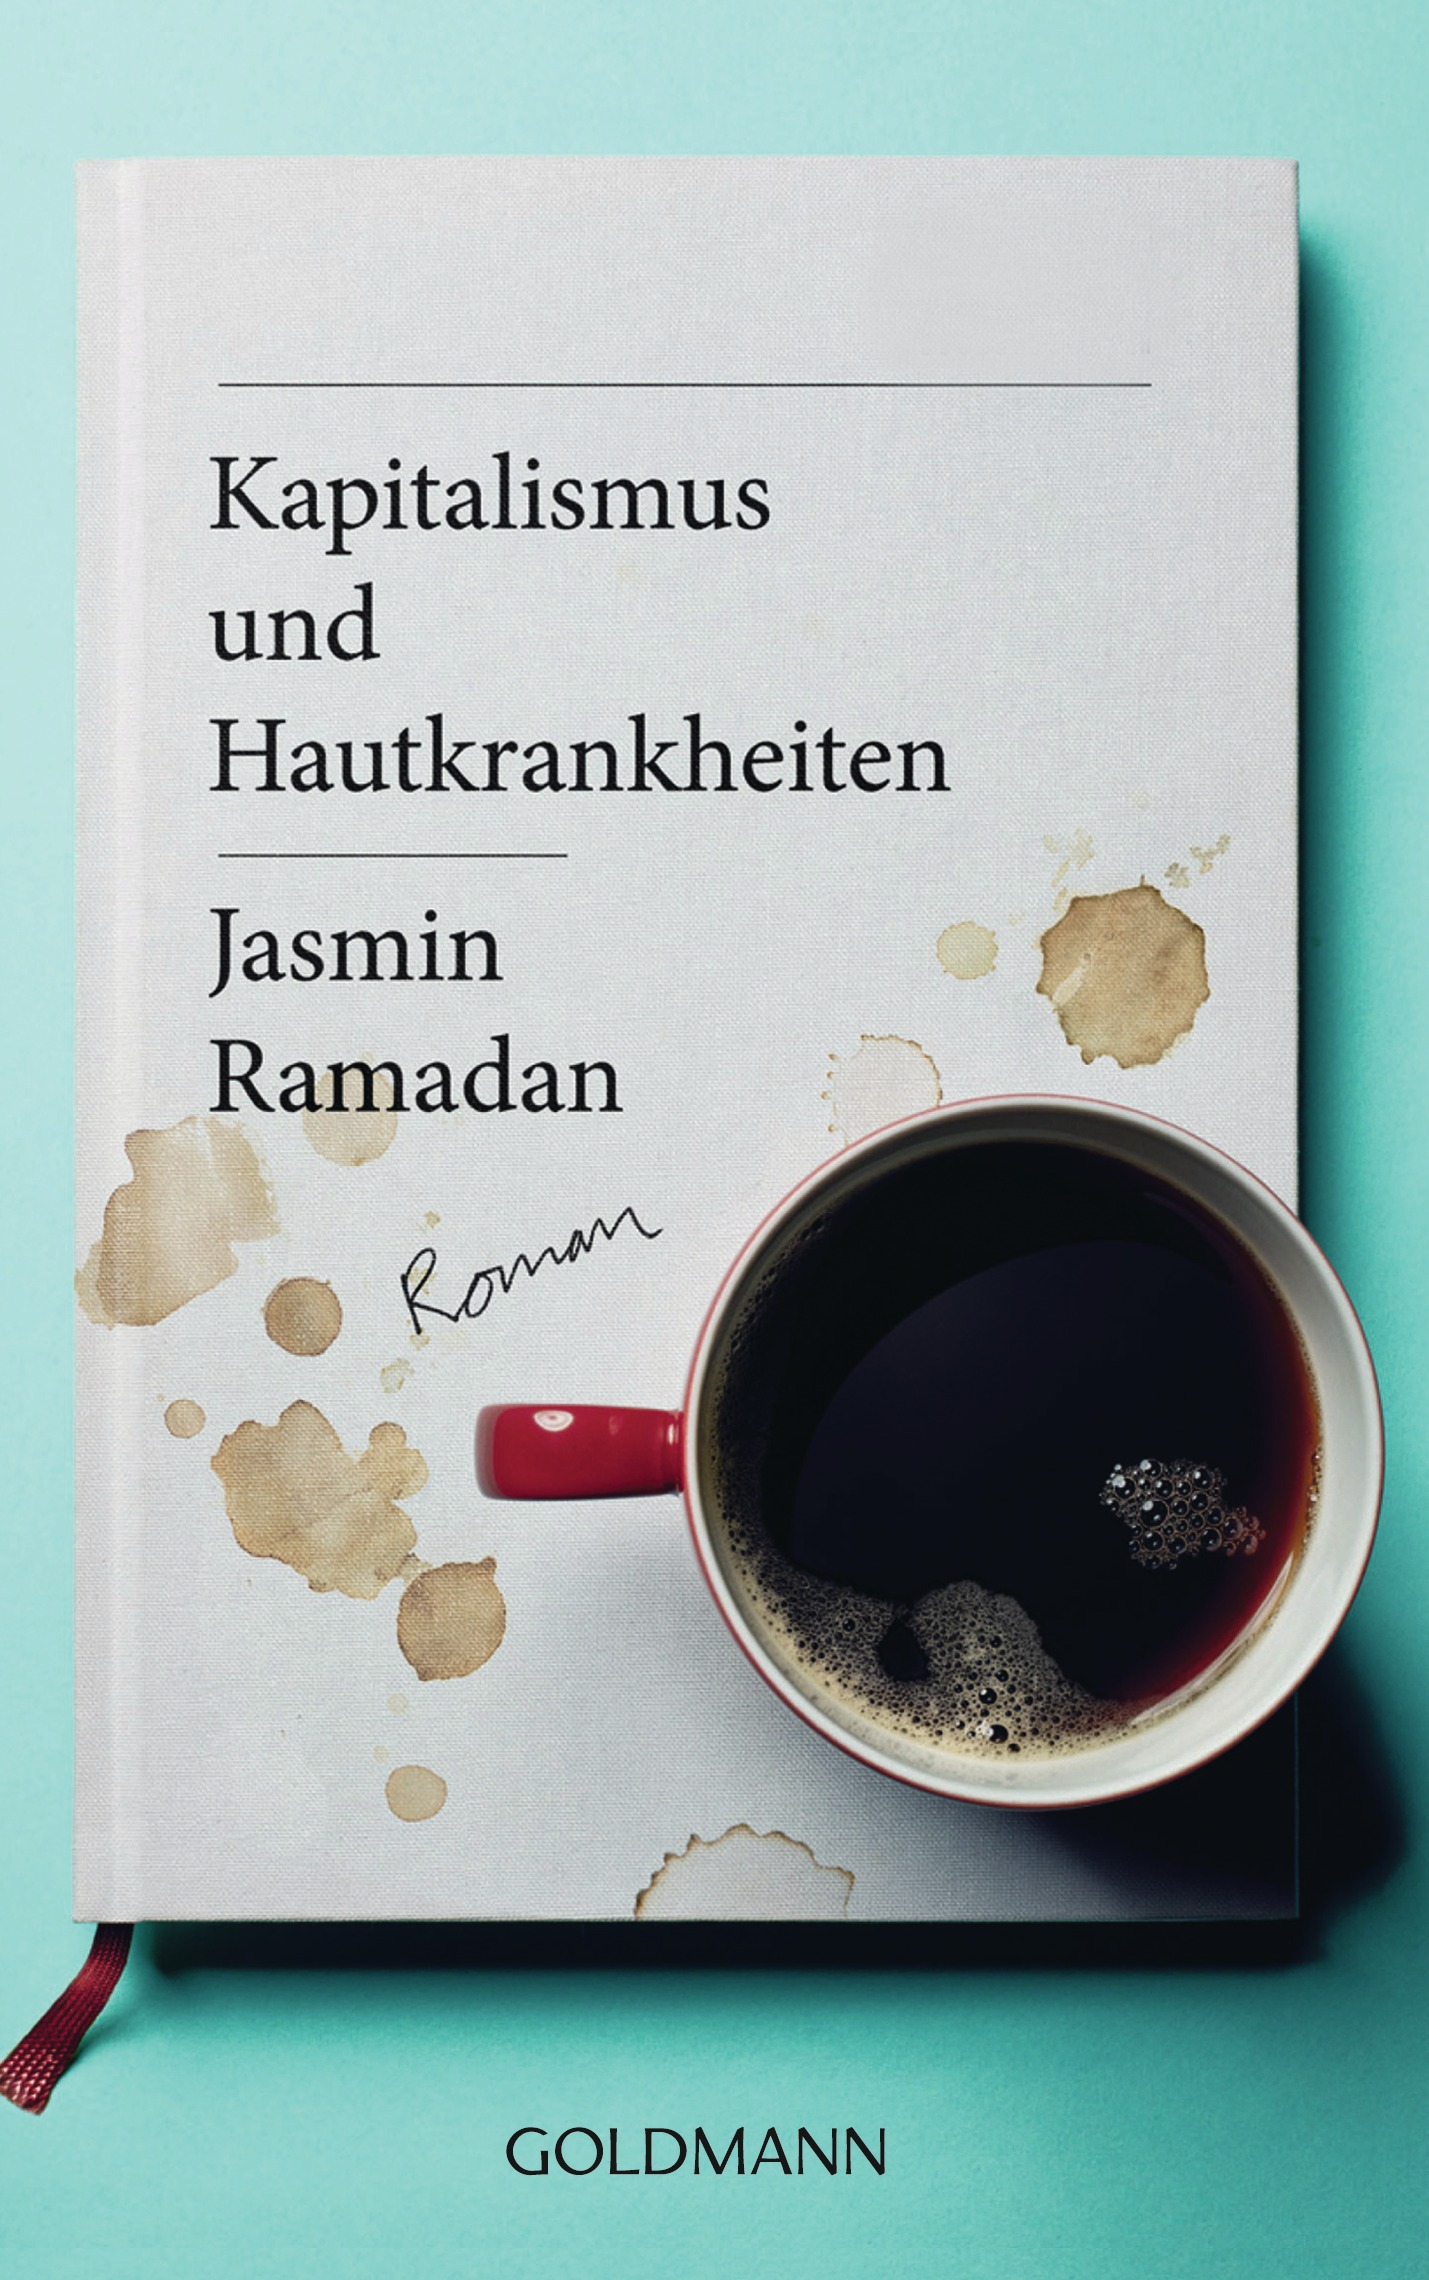 Kapitalismus und Hautkrankheiten von Jasmin Ramadan